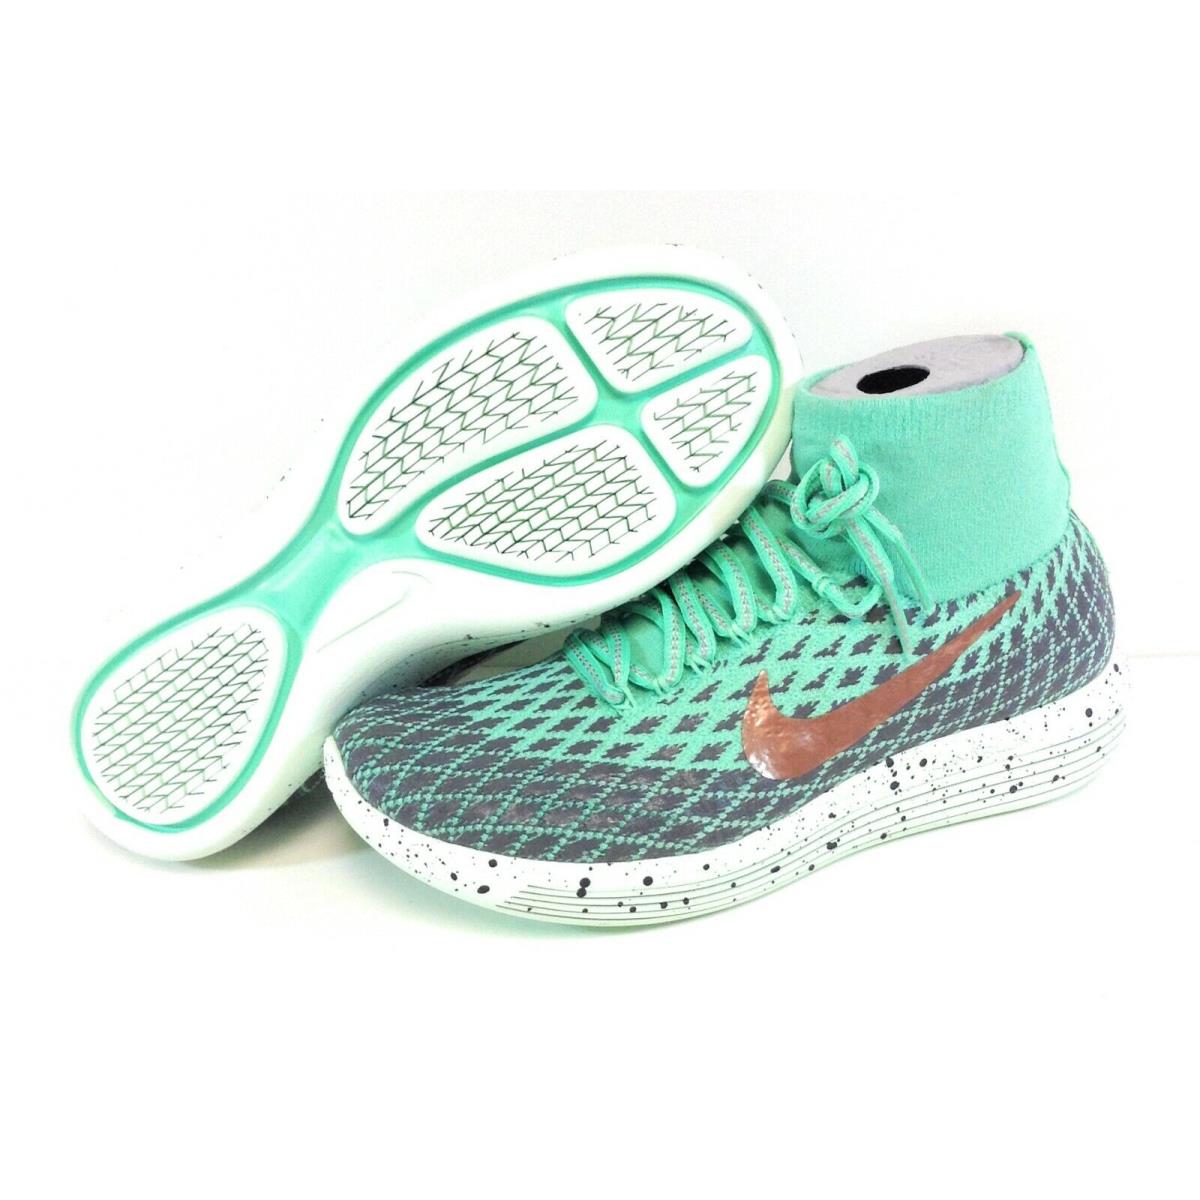 Womens Nike Lunarepic Flyknit Shield 849665 300 Green Glow 2016 Sneakers Shoes - Green